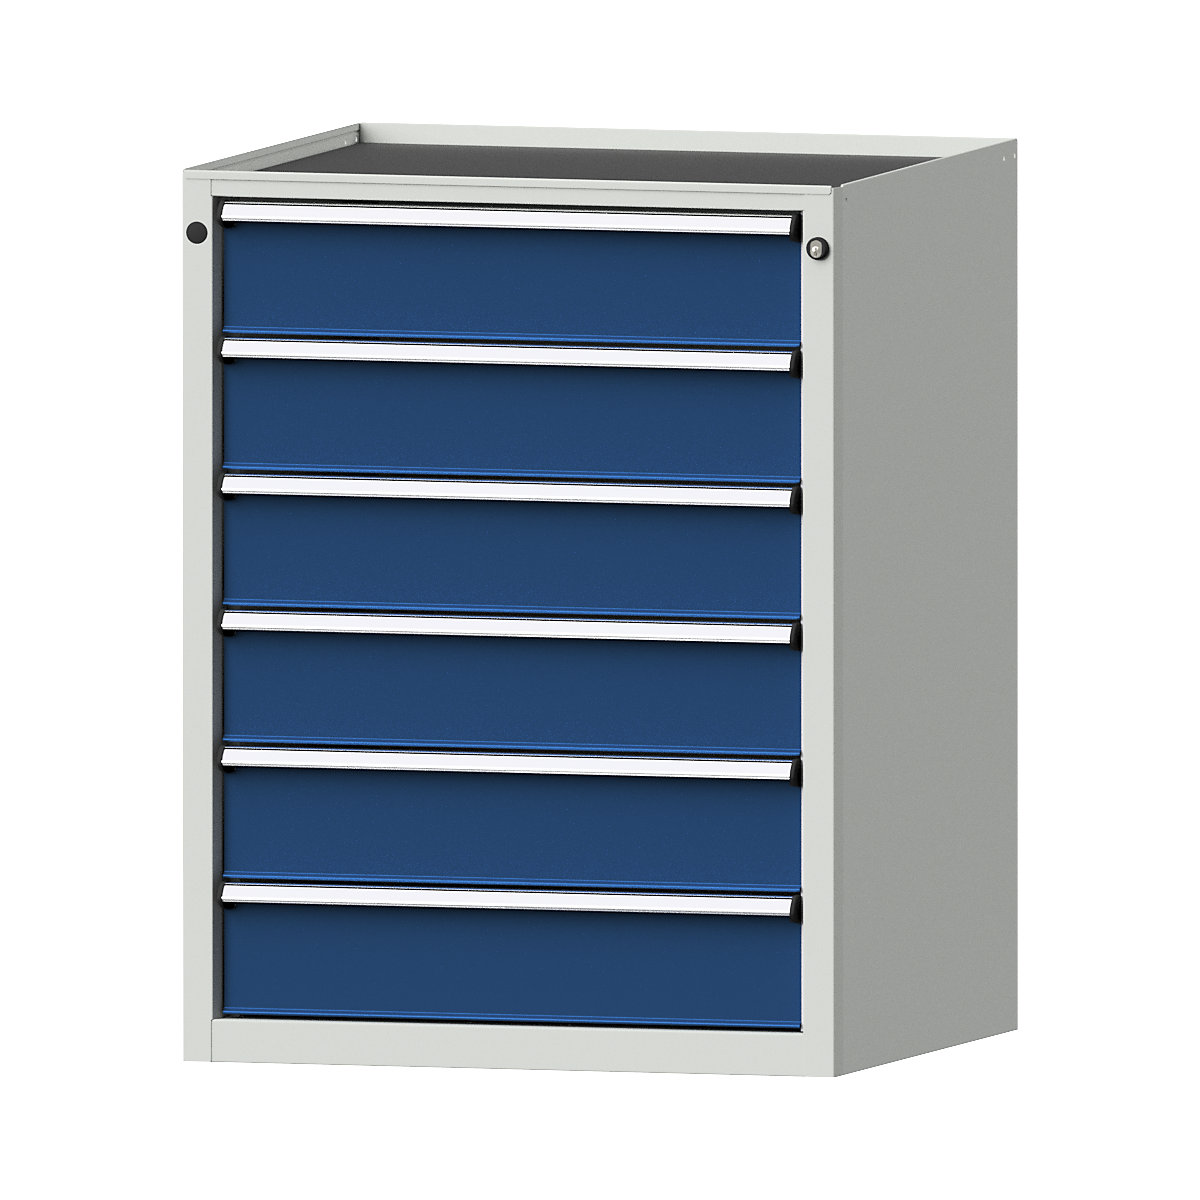 Armoire à tiroirs – ANKE, l x p 760 x 675 mm, 6 tiroirs, hauteur 980 mm, façade bleu gentiane-7